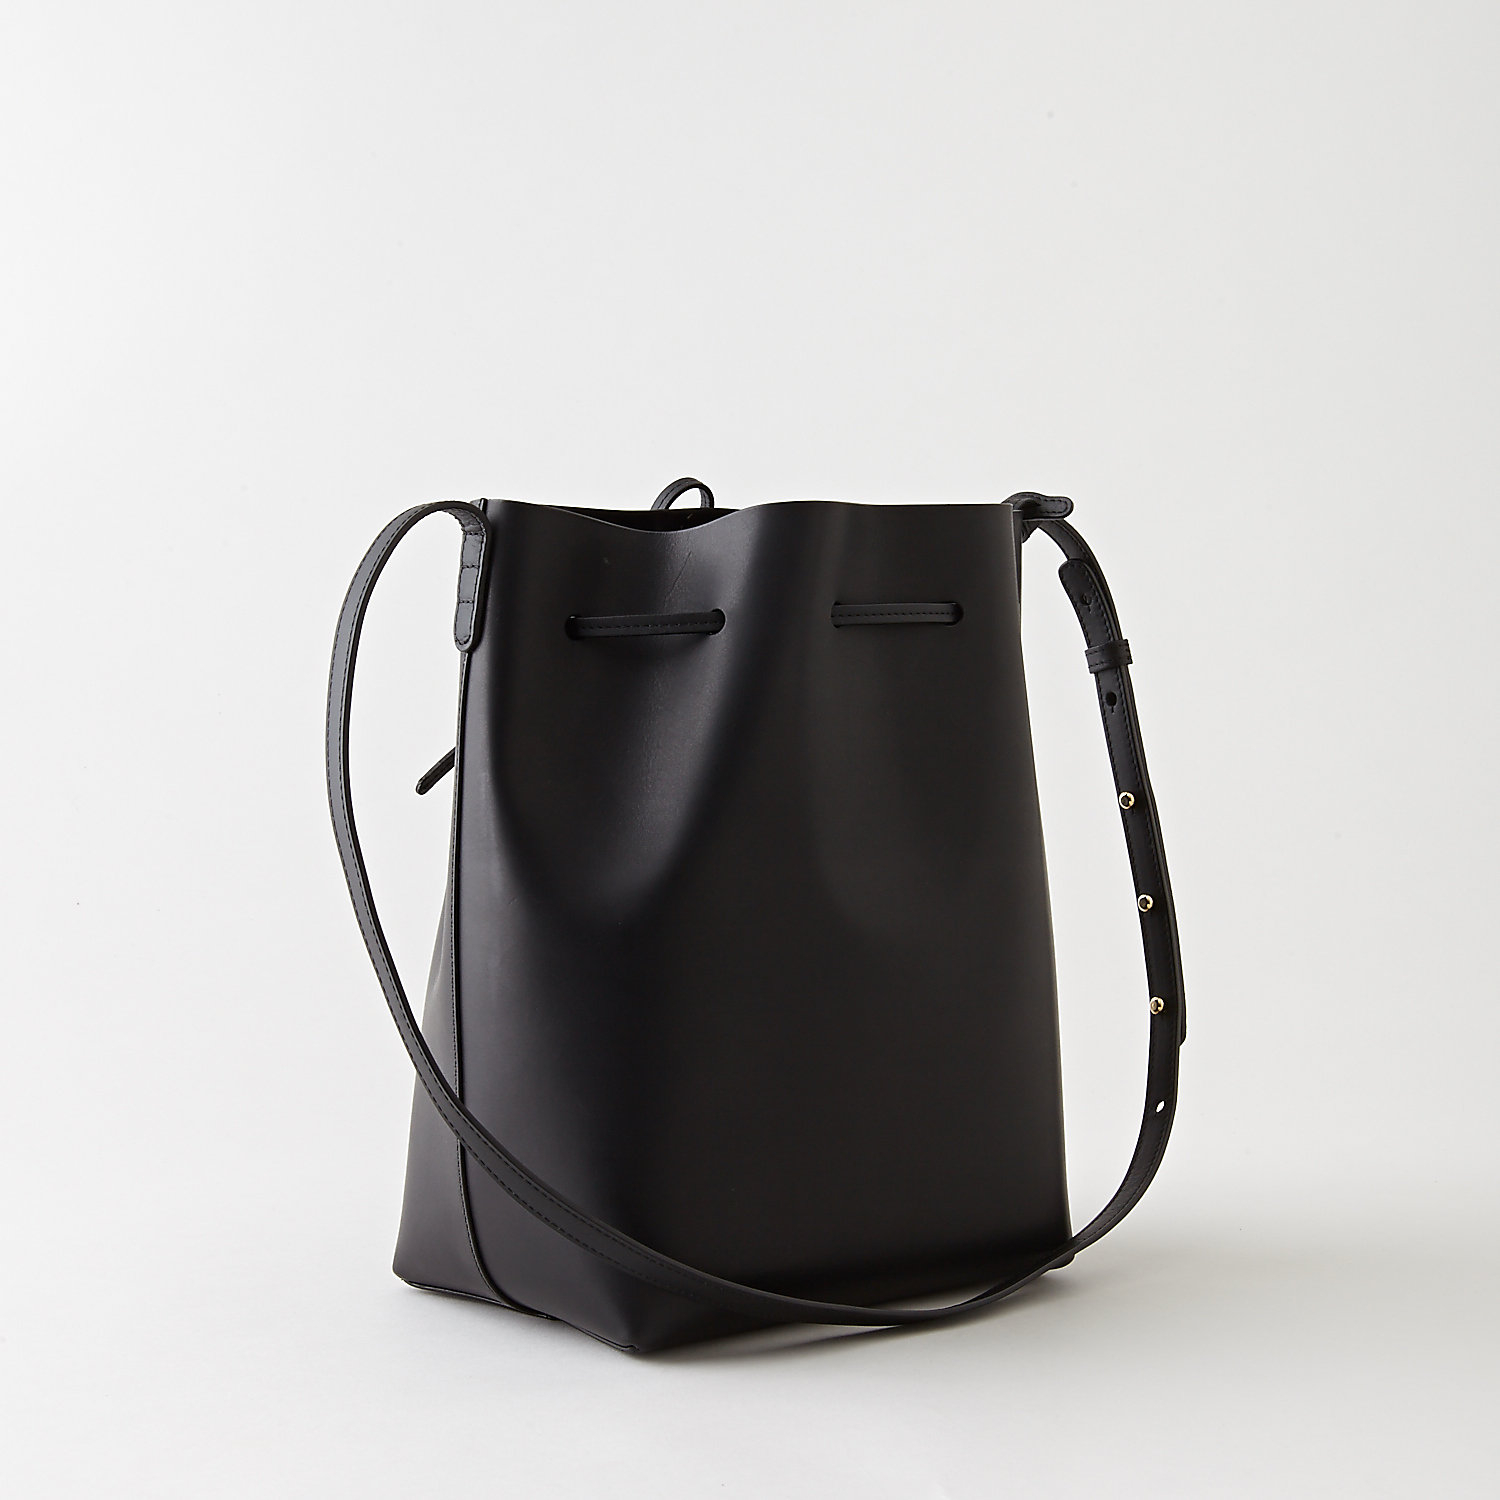 Mansur gavriel Bucket Bag in Black (BLACK PEWTER) | Lyst